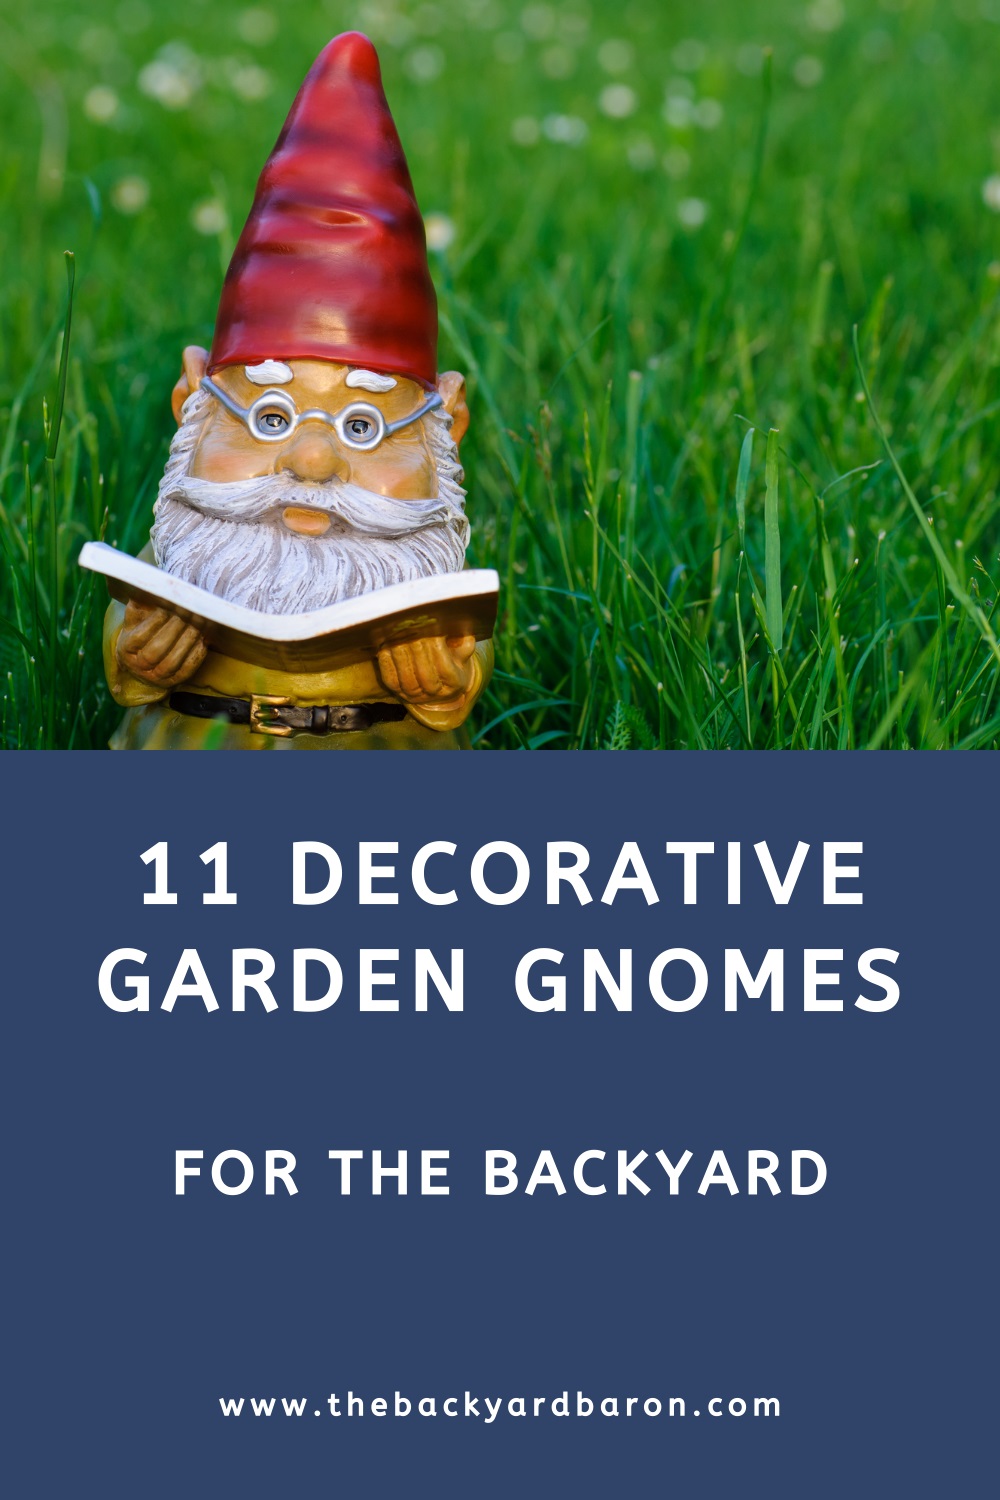 11 Decorative garden gnome ideas